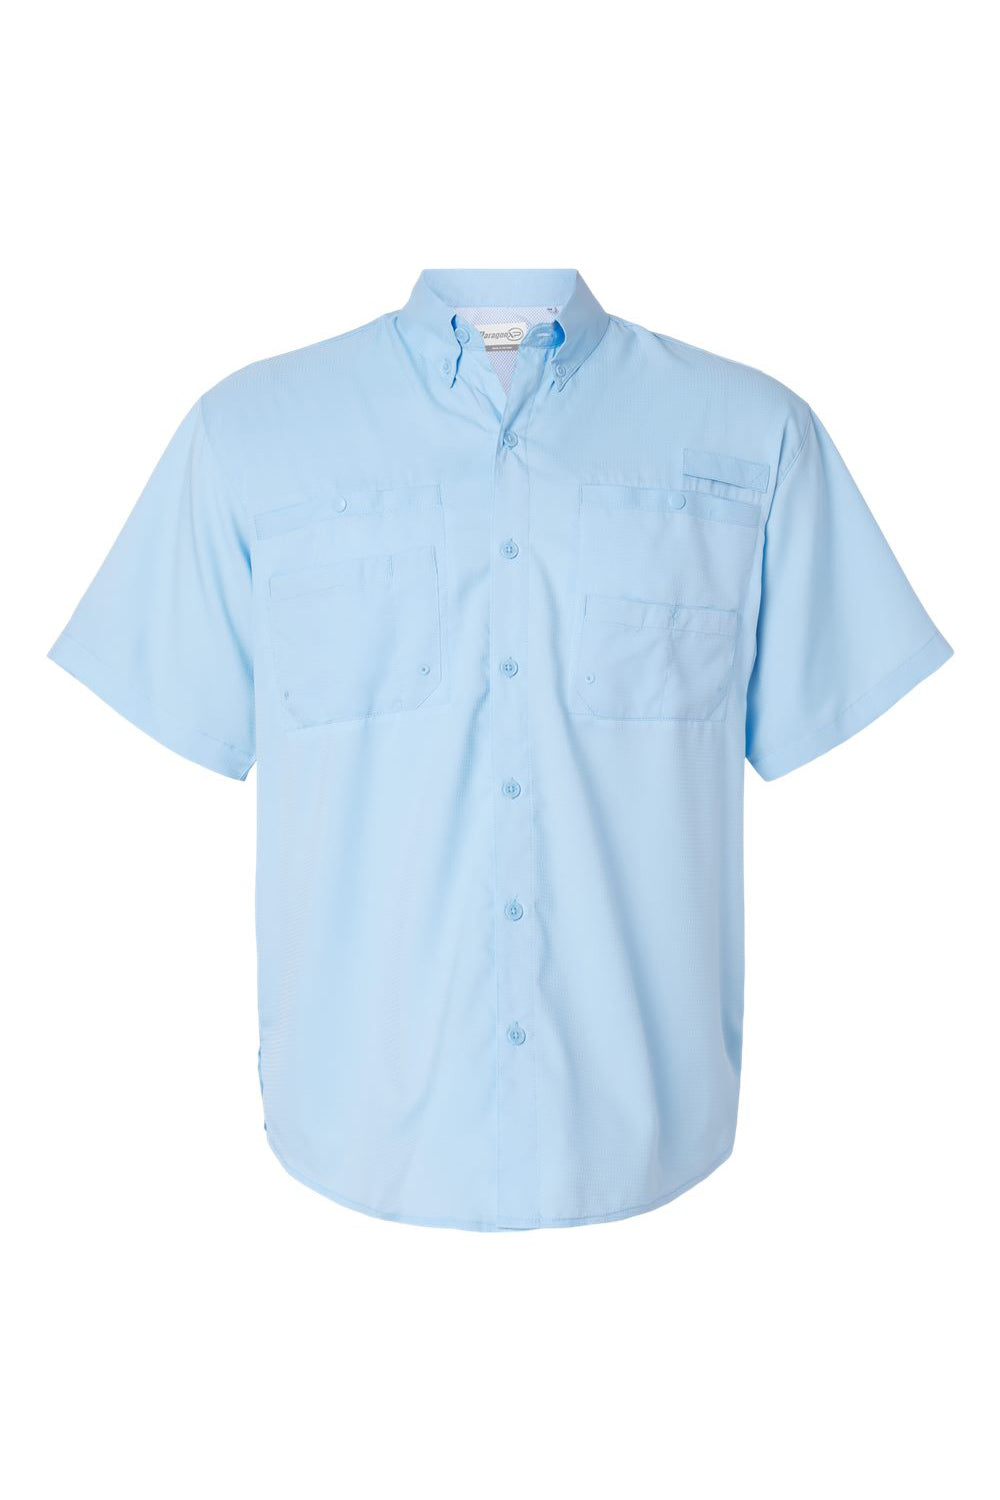 Paragon 700 Mens Hatteras Performance Short Sleeve Button Down Shirt Blue Mist Flat Front